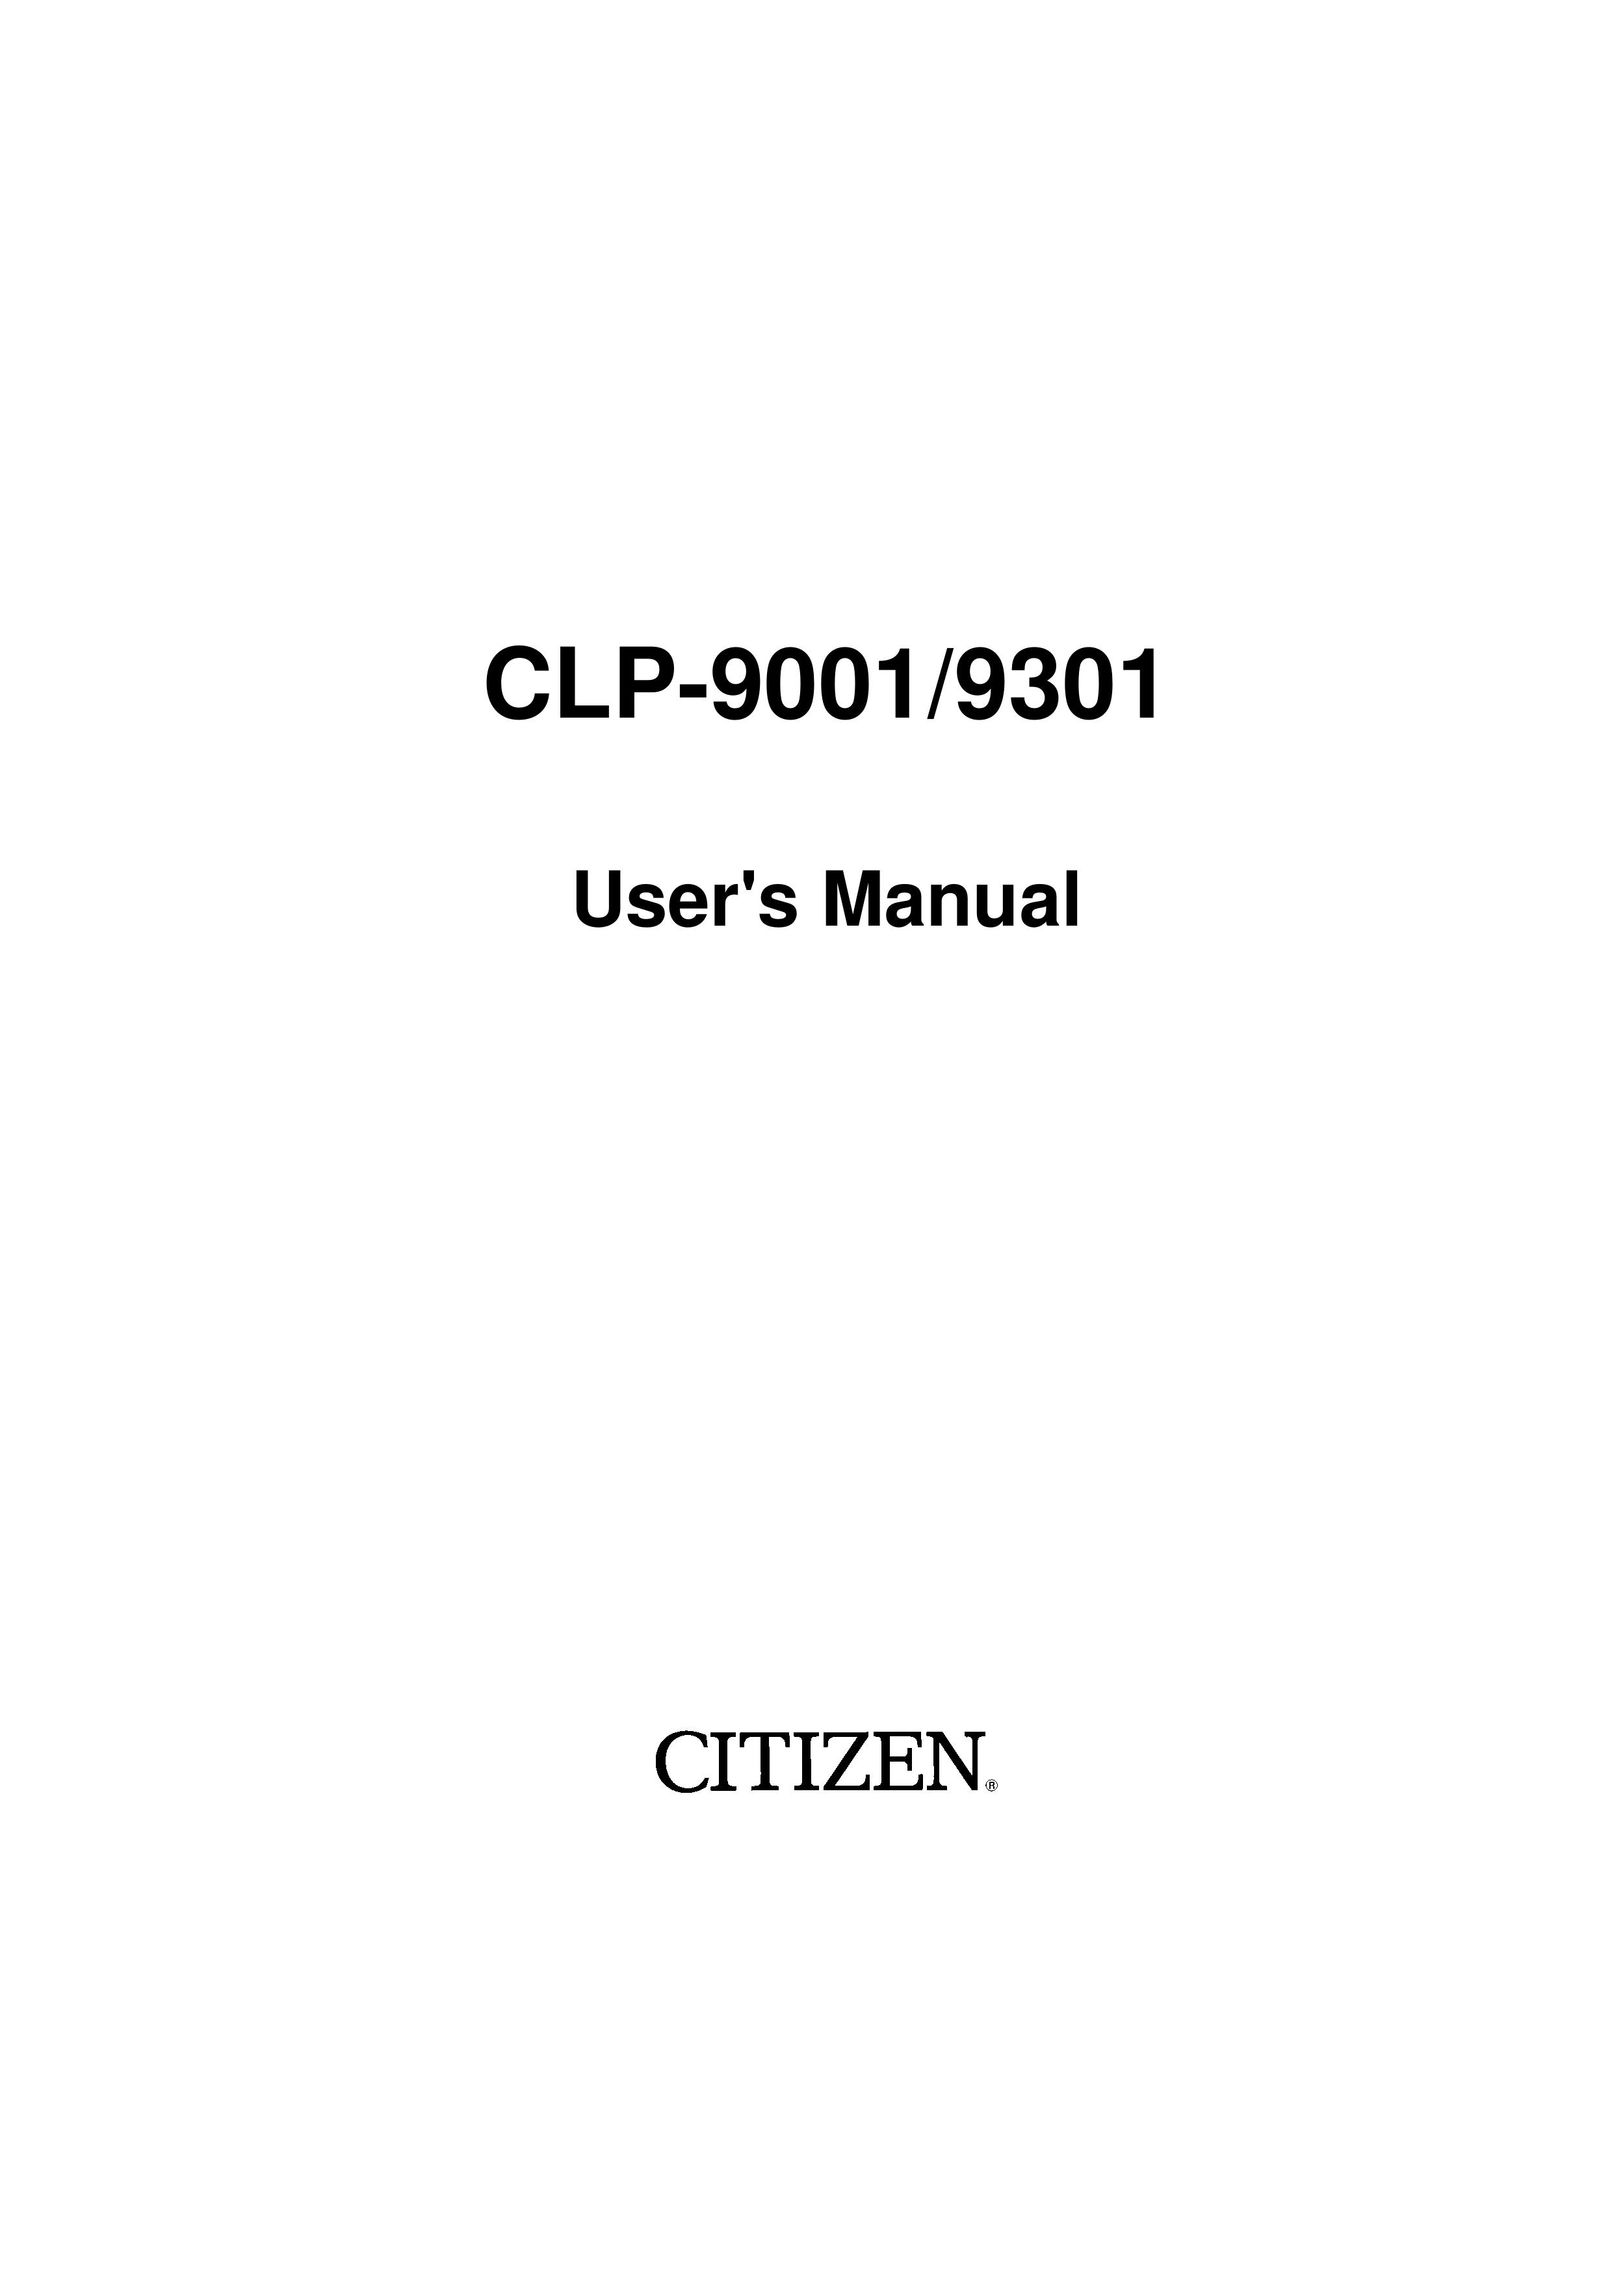 Citizen Systems CLP-9001 Printer User Manual